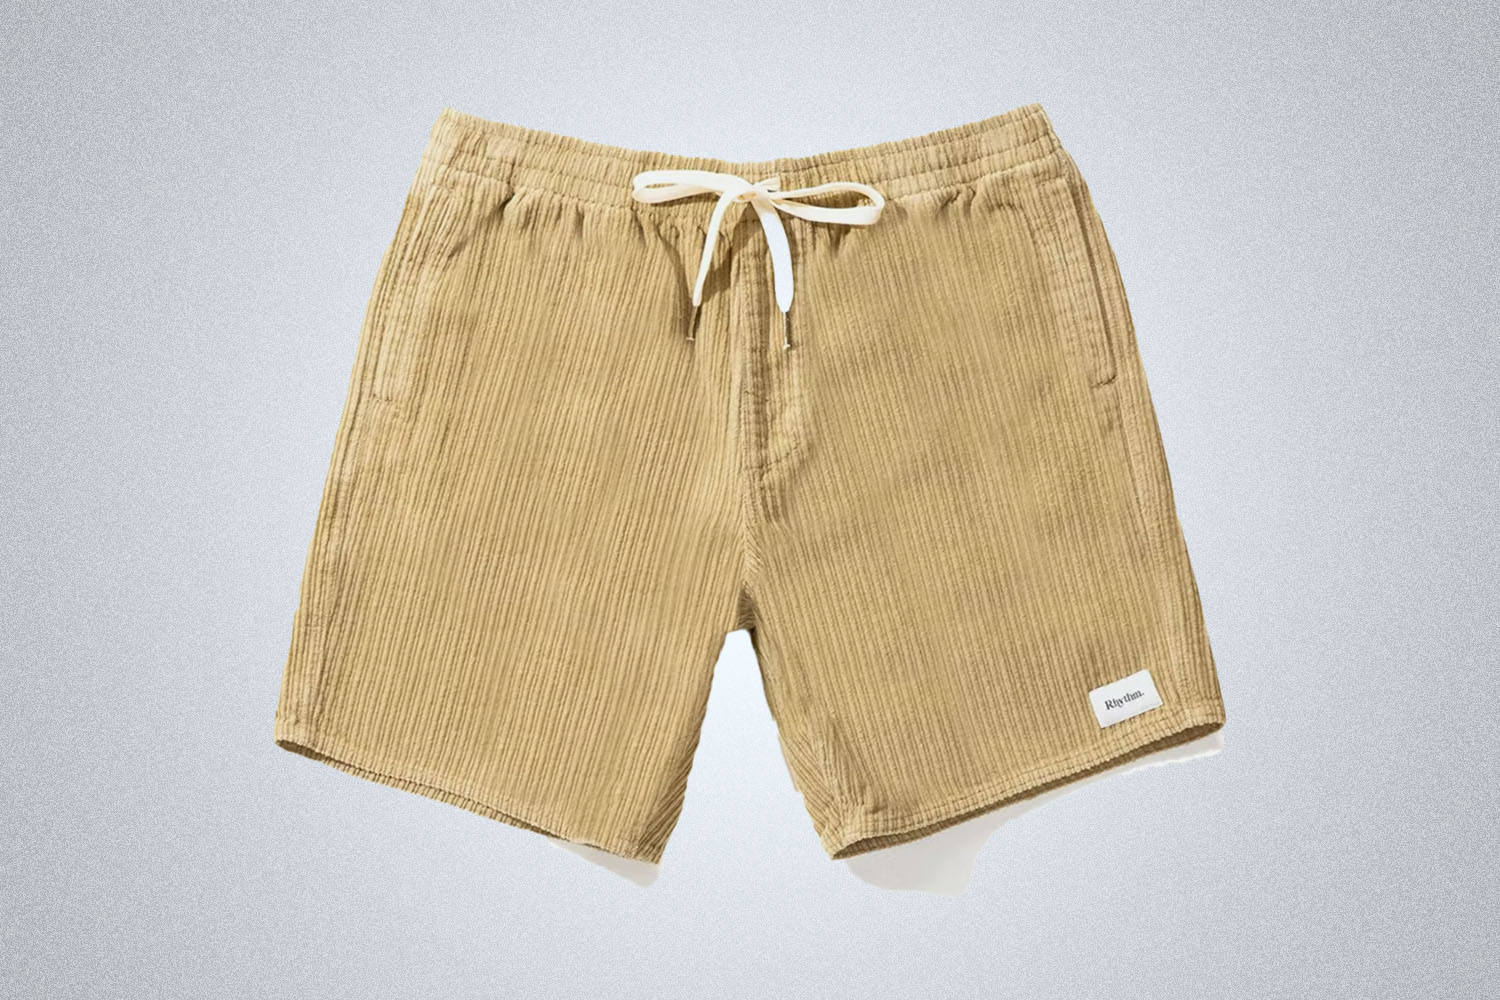 a pair of sand Rhythm corduroy shorts on a grey background